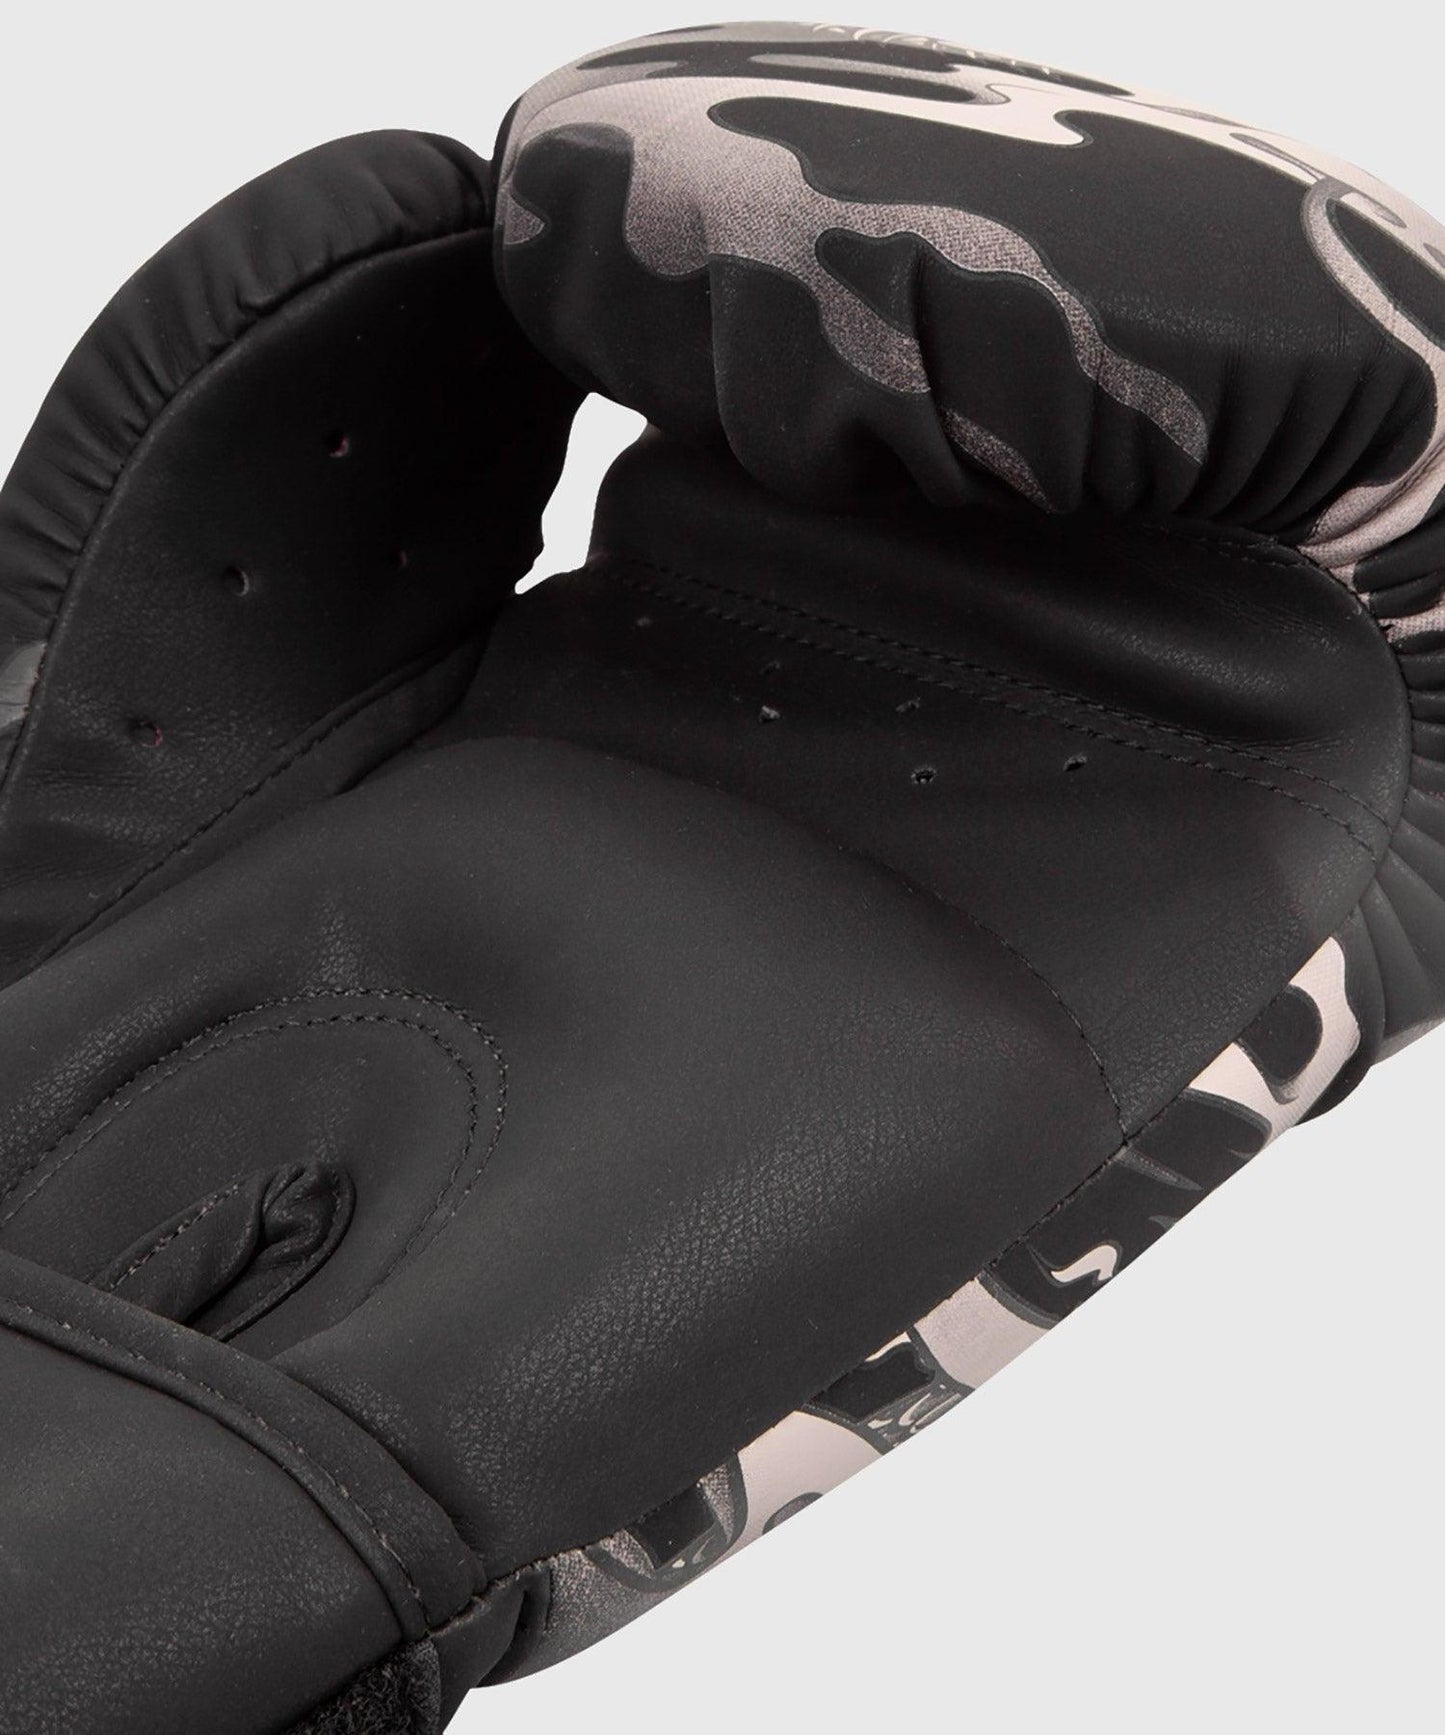 Venum Dragon's Flight Boxing Gloves - Black/Sand Picture 4